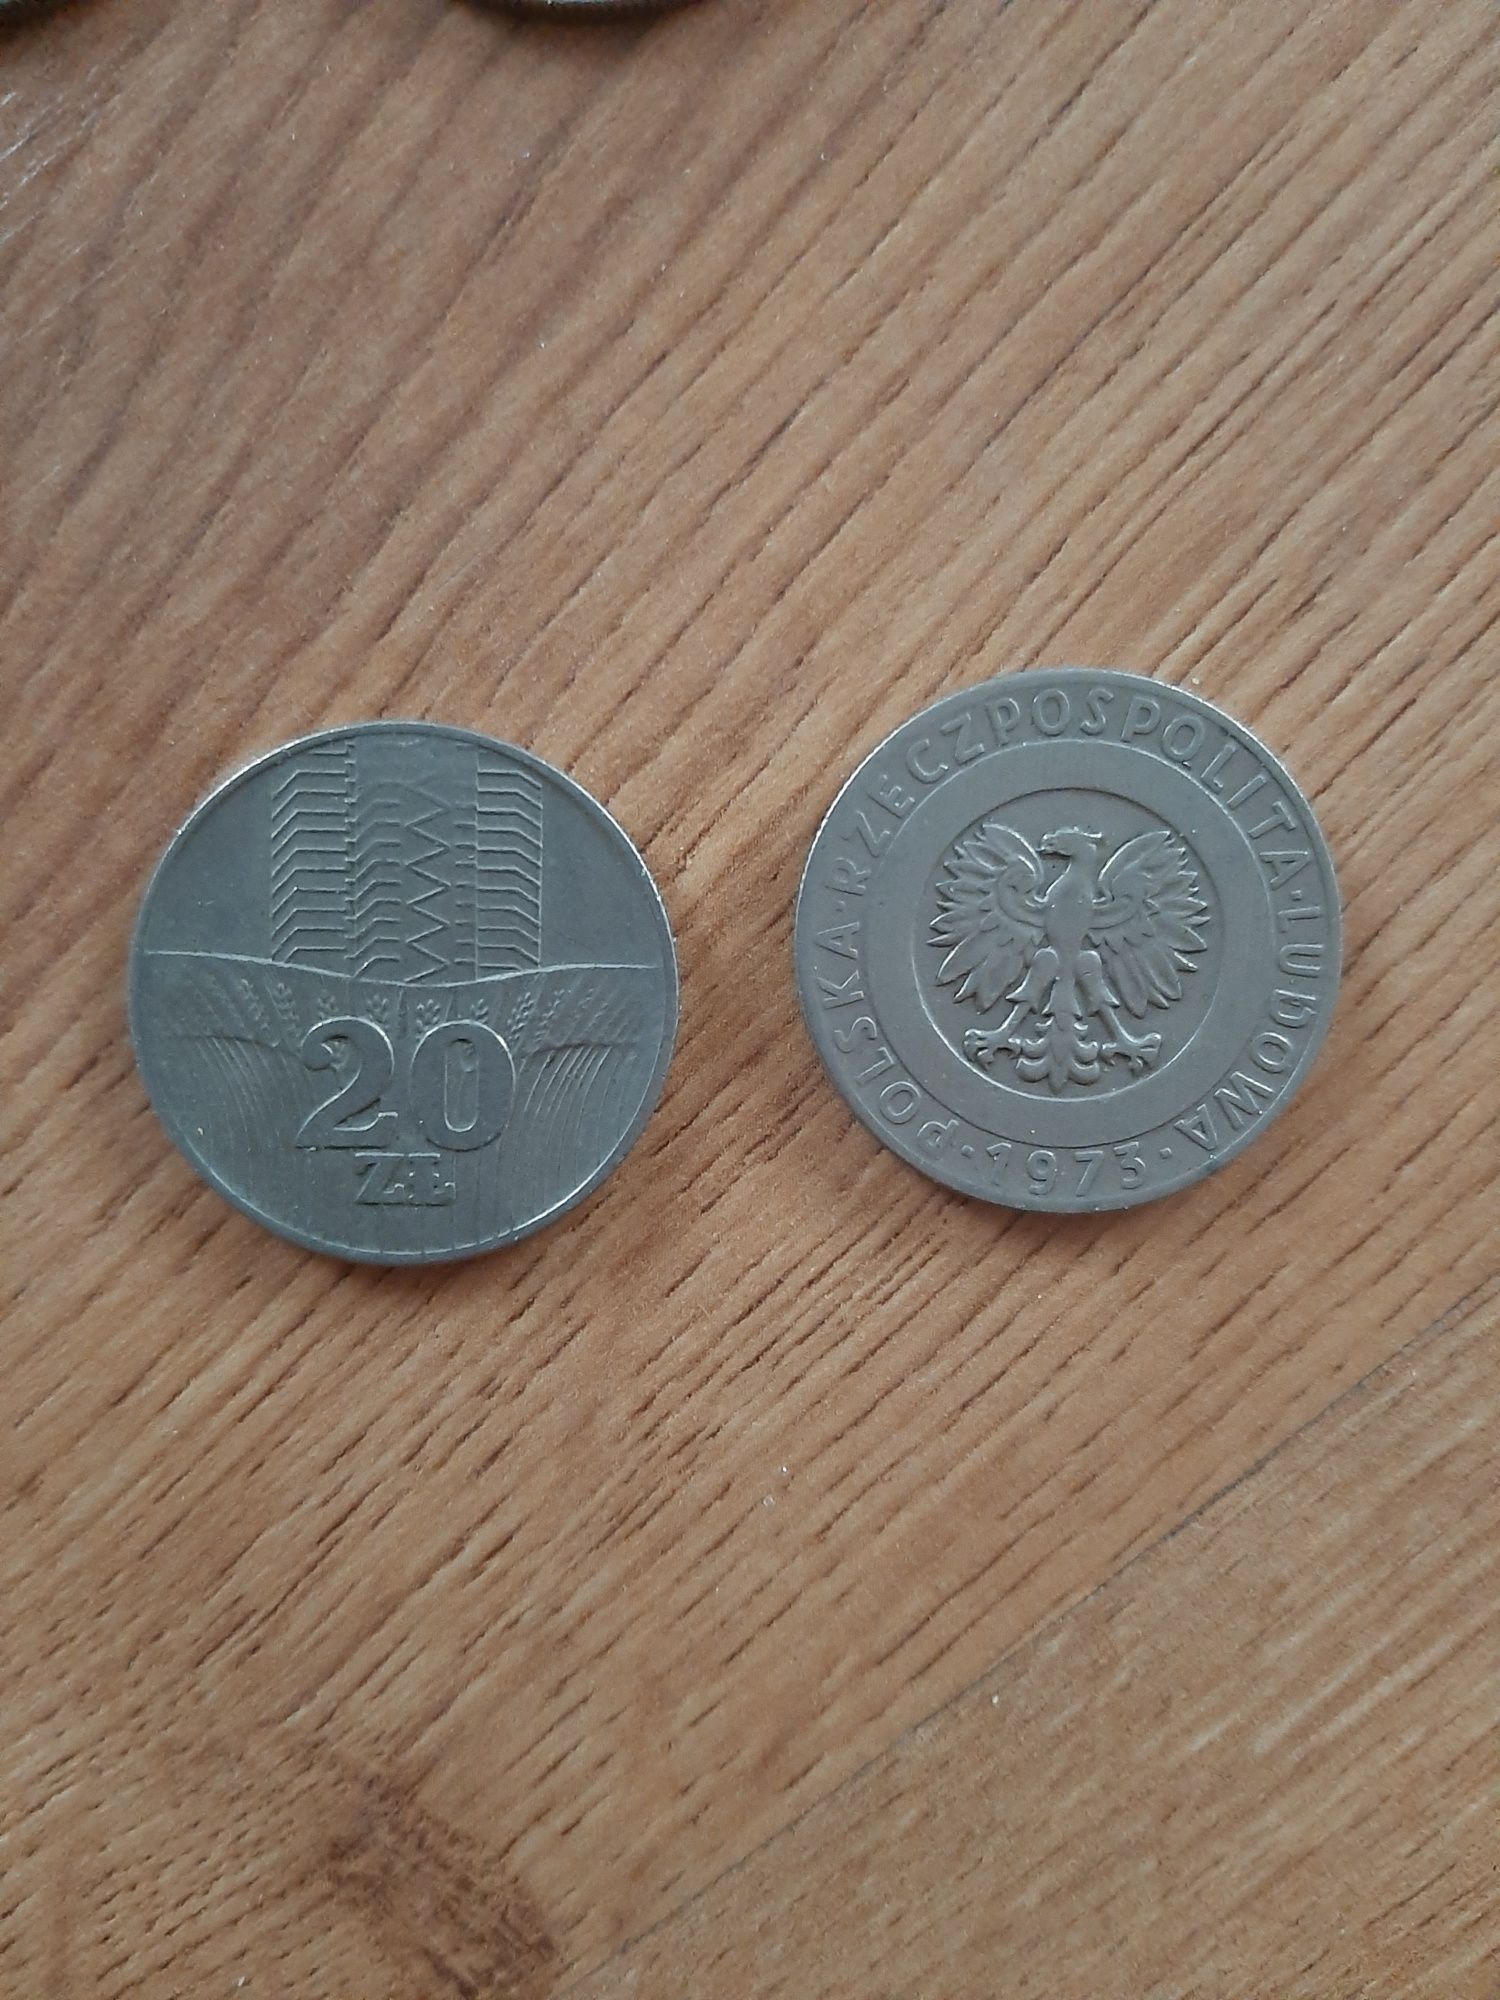 Stare nominały monety